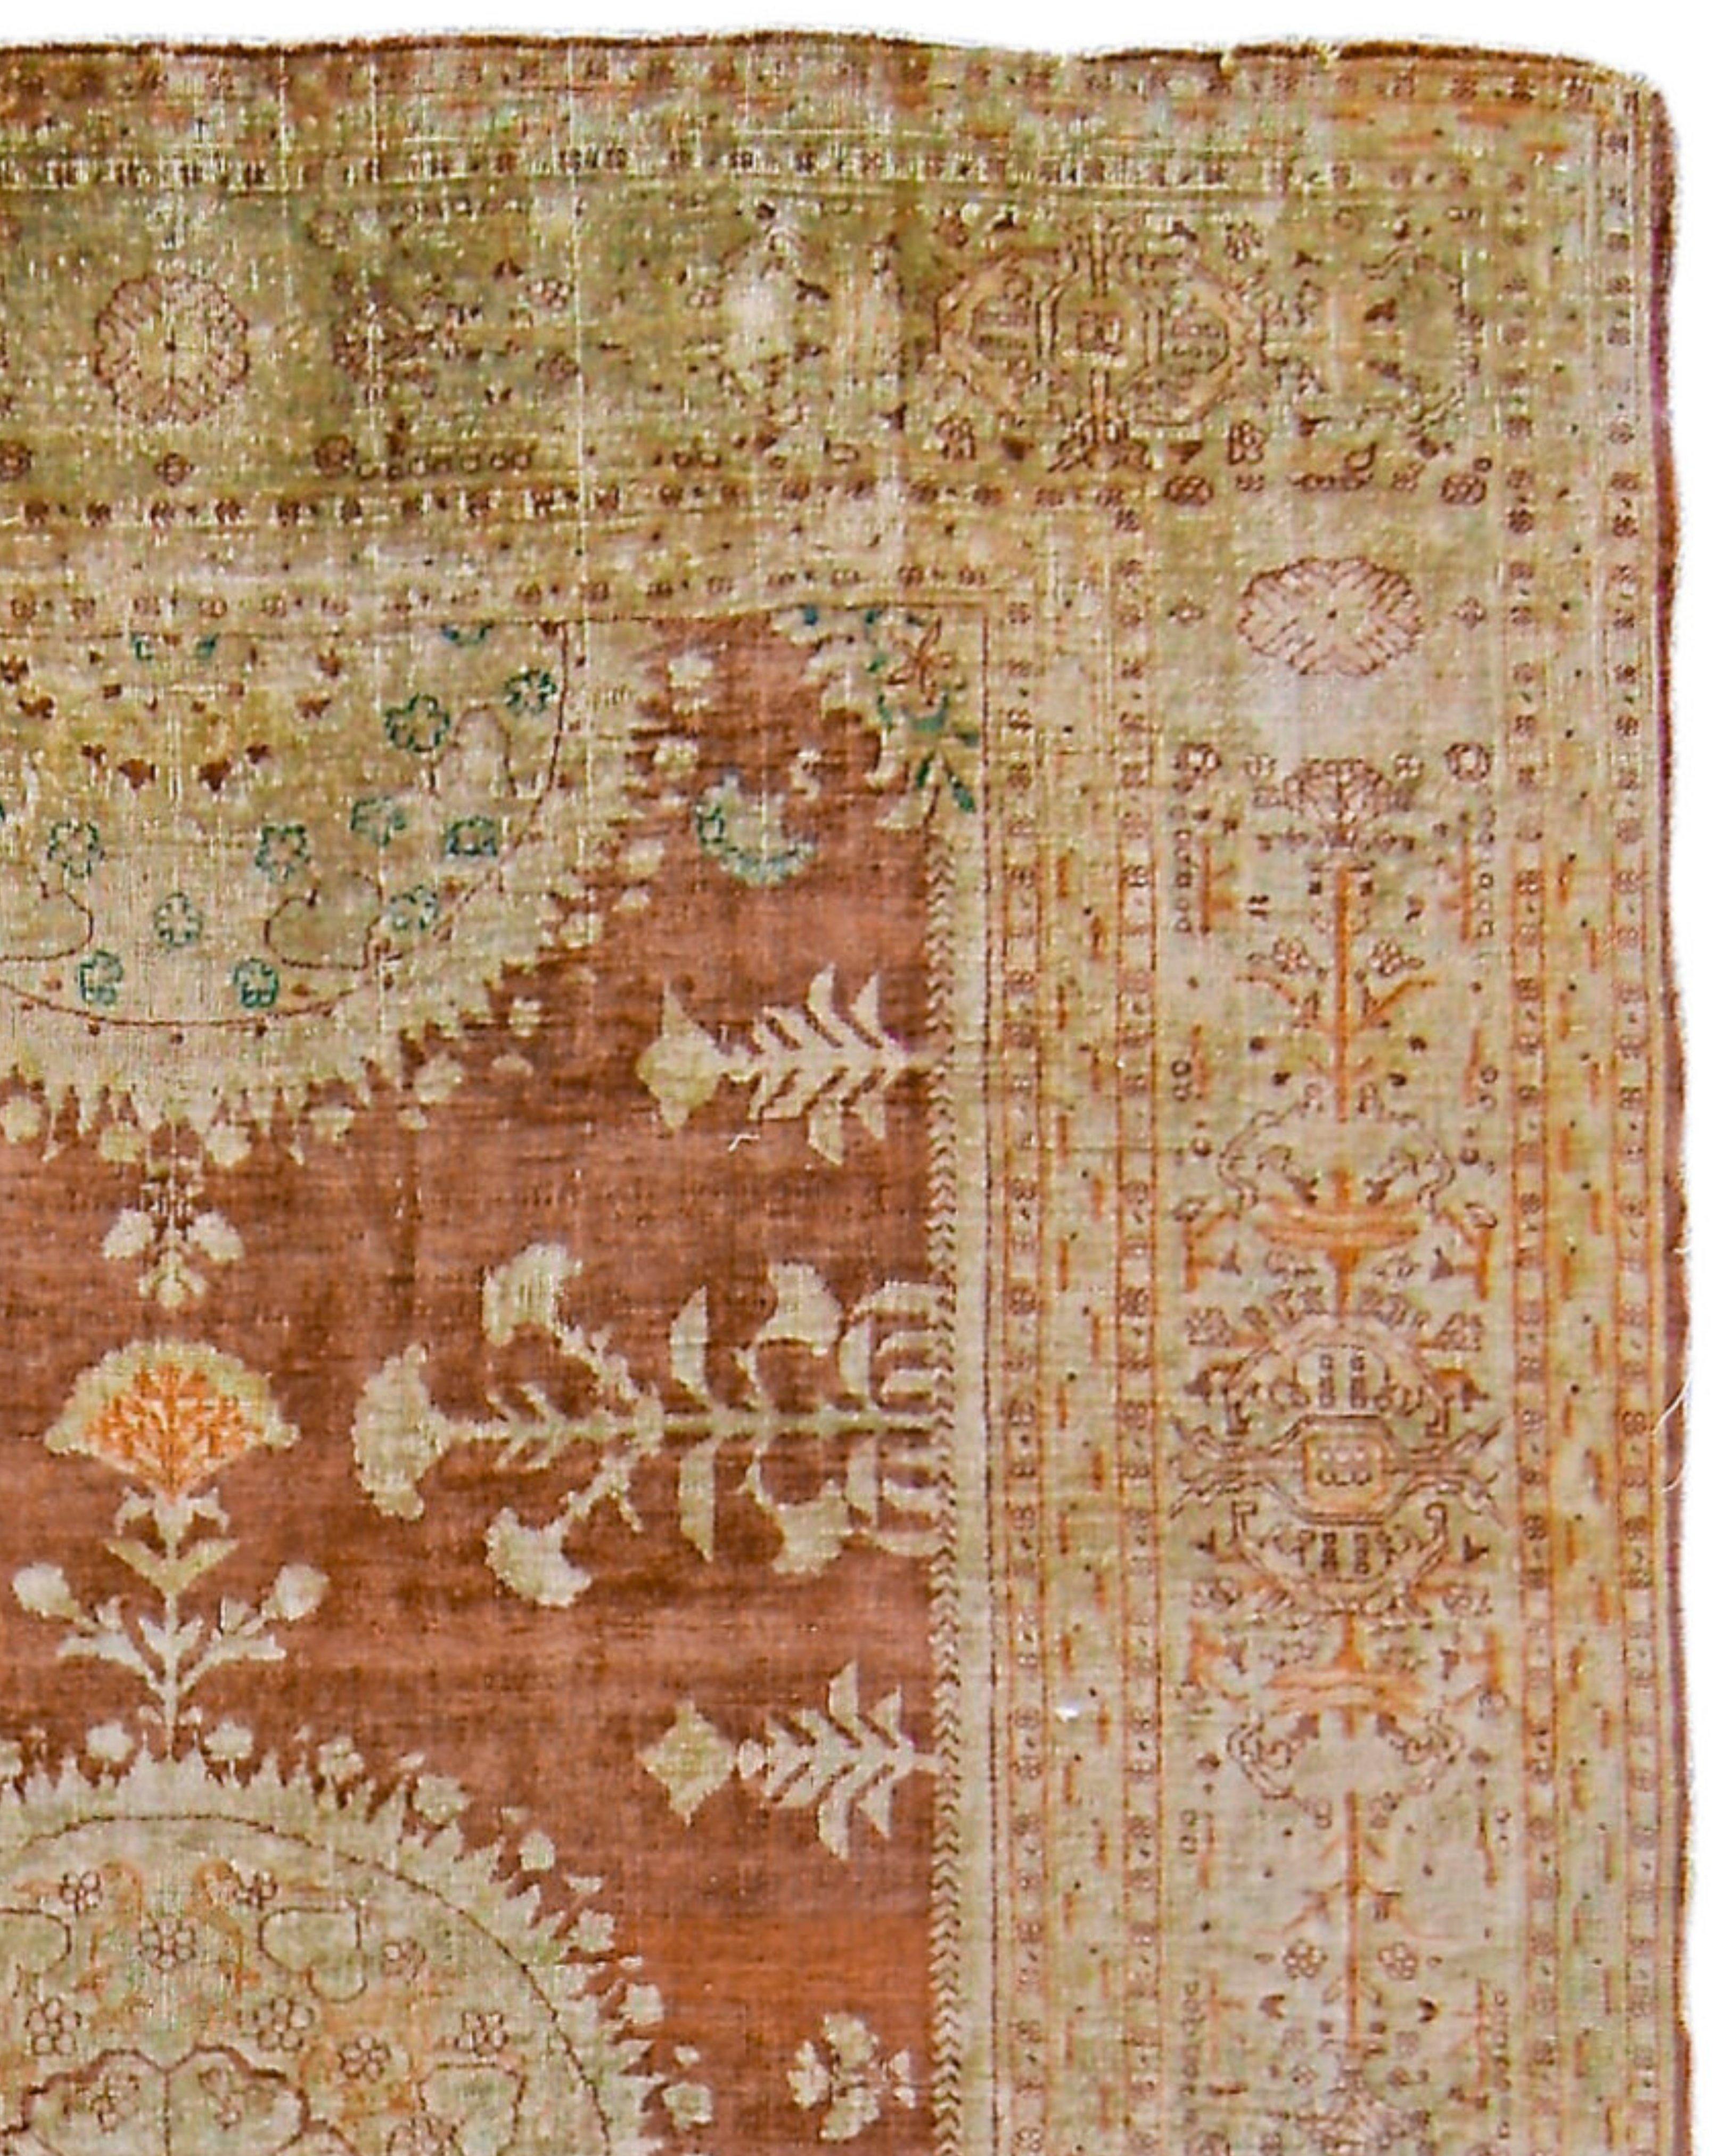 Antique Persian Tabriz Silk Rug, 19th Century

Additional information:
Dimensions: 4'2